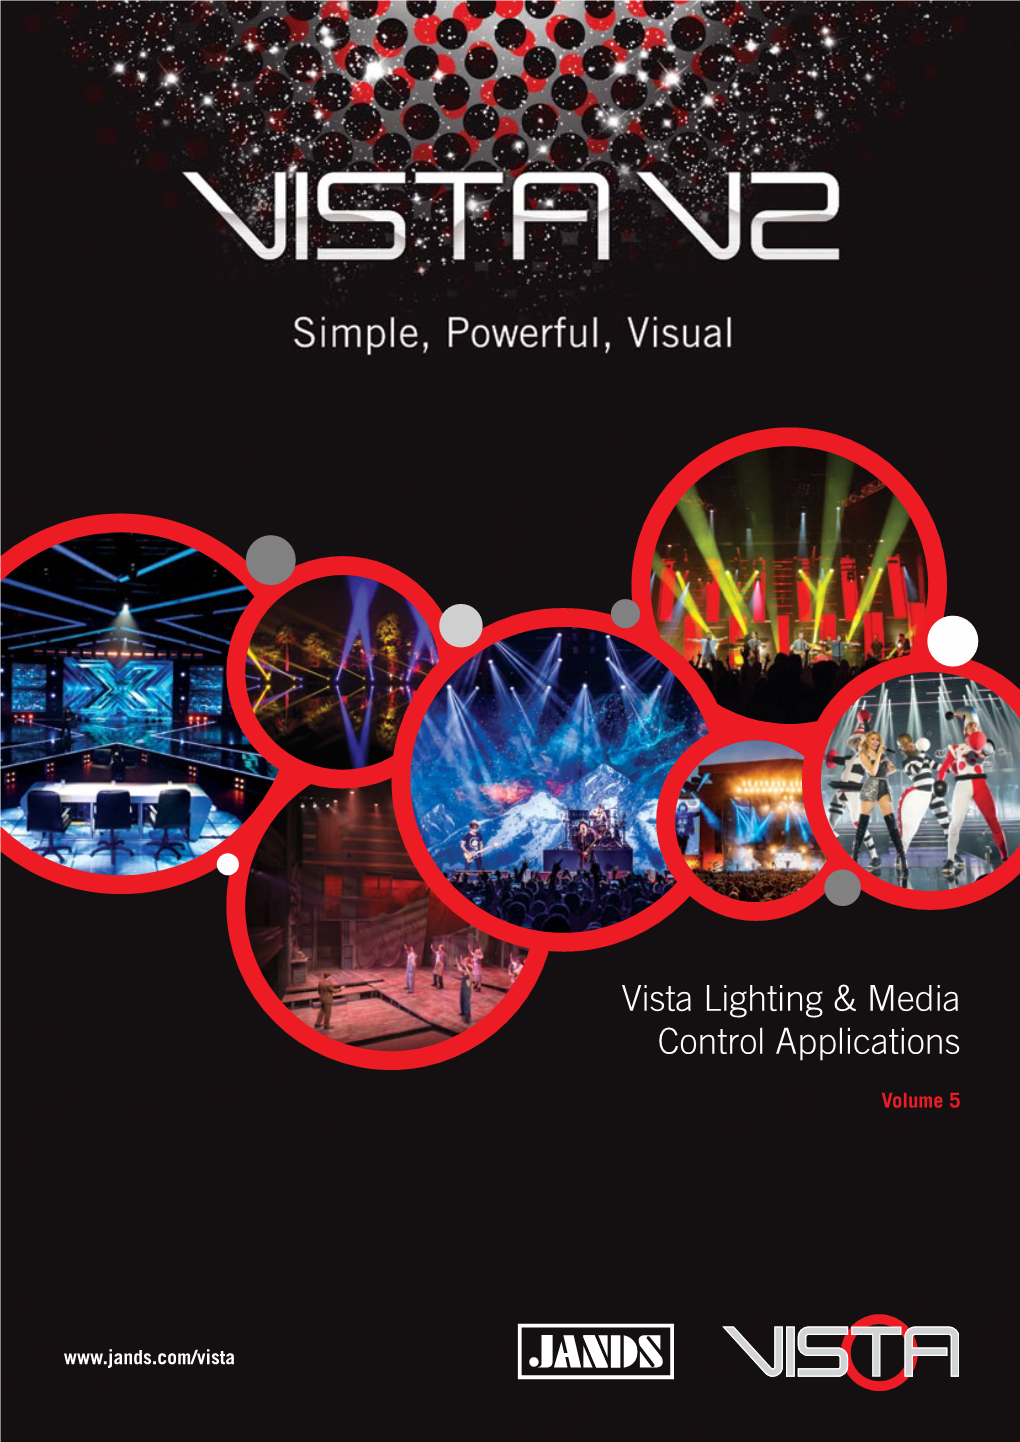 Vista Lighting & Media Control Applications